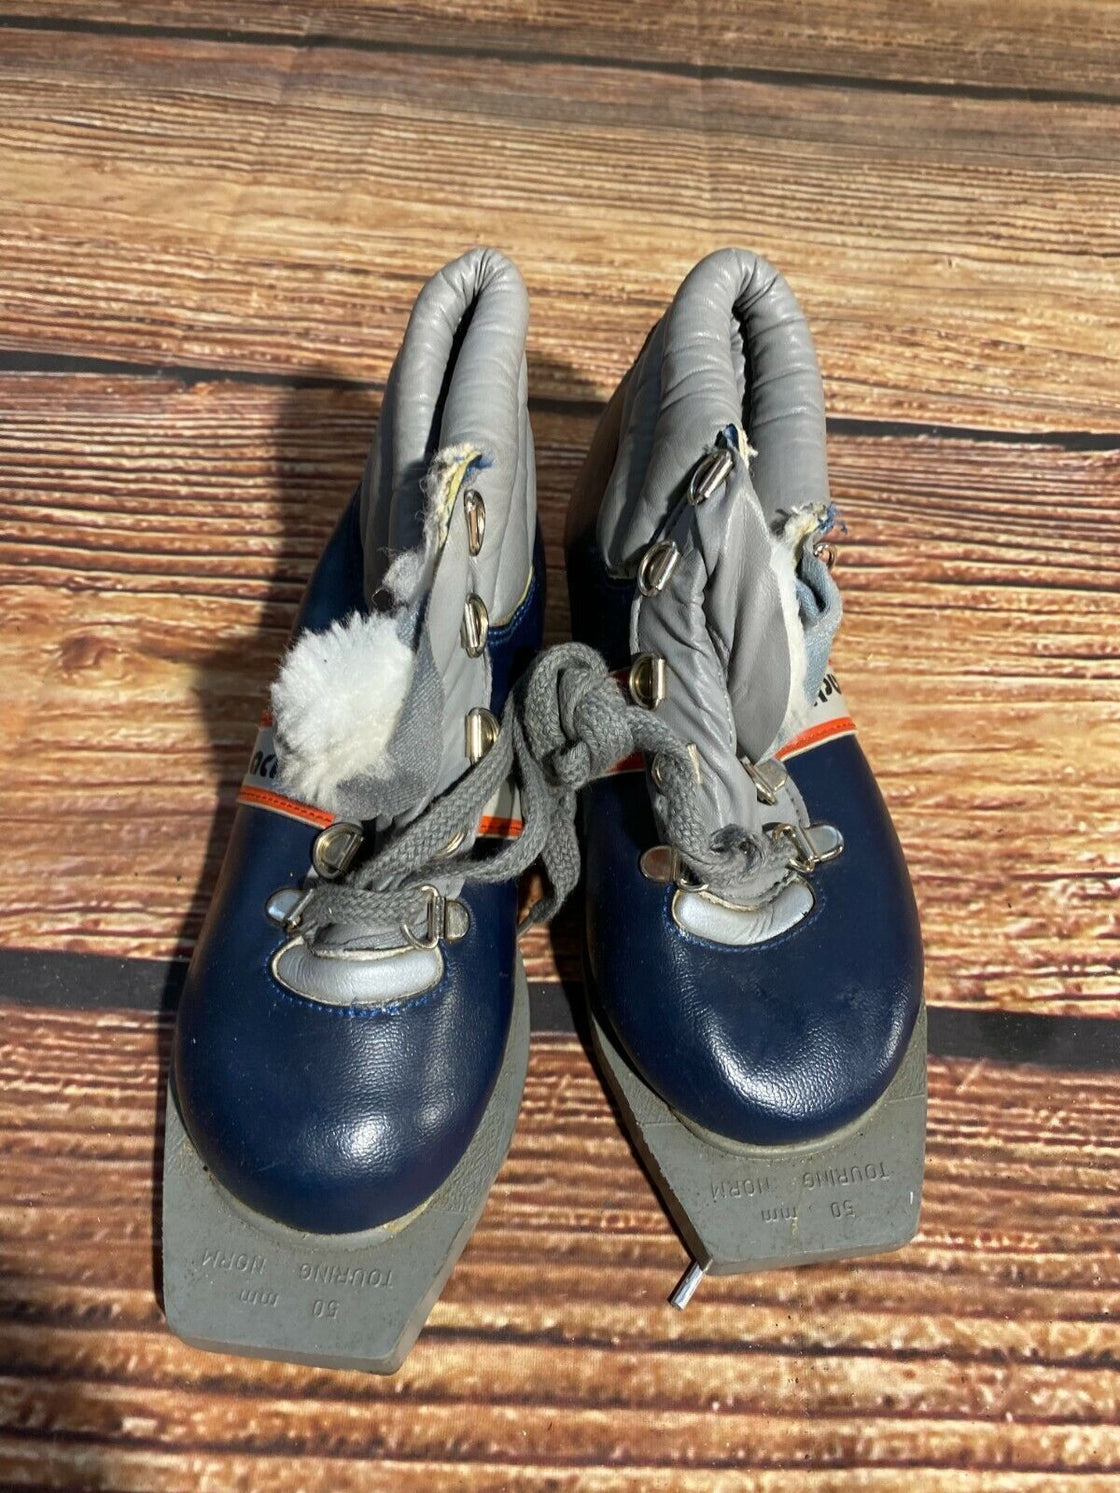 Botas Vintage Cross Country Ski Boots Kids Size EU31 US12.5 Touring Norm 50mm